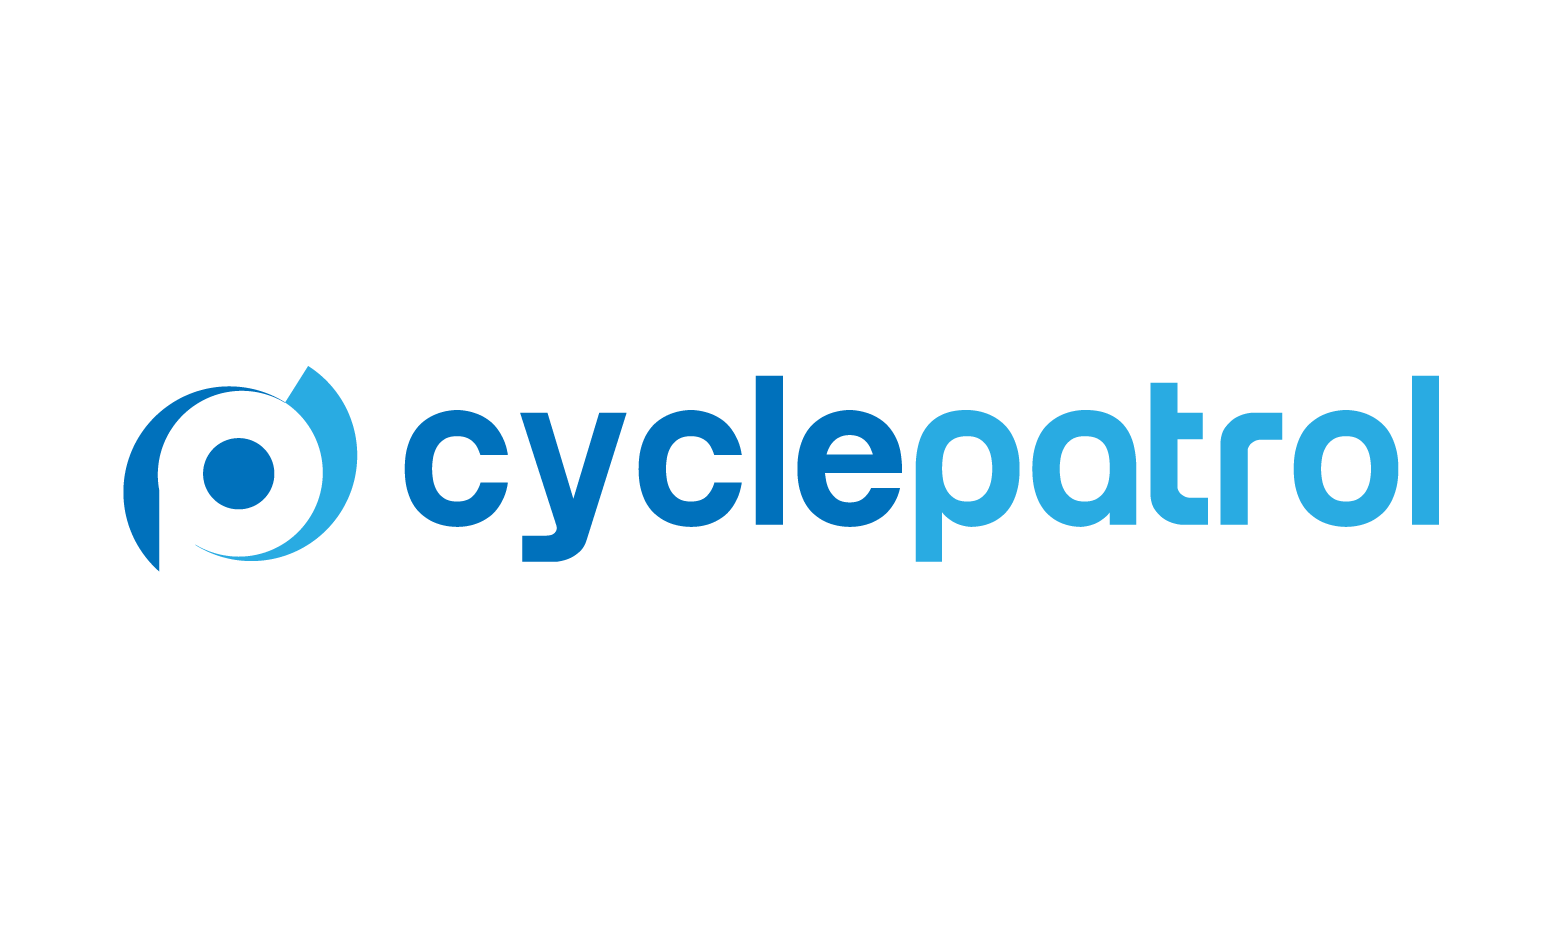 CyclePatrol.com - Creative brandable domain for sale